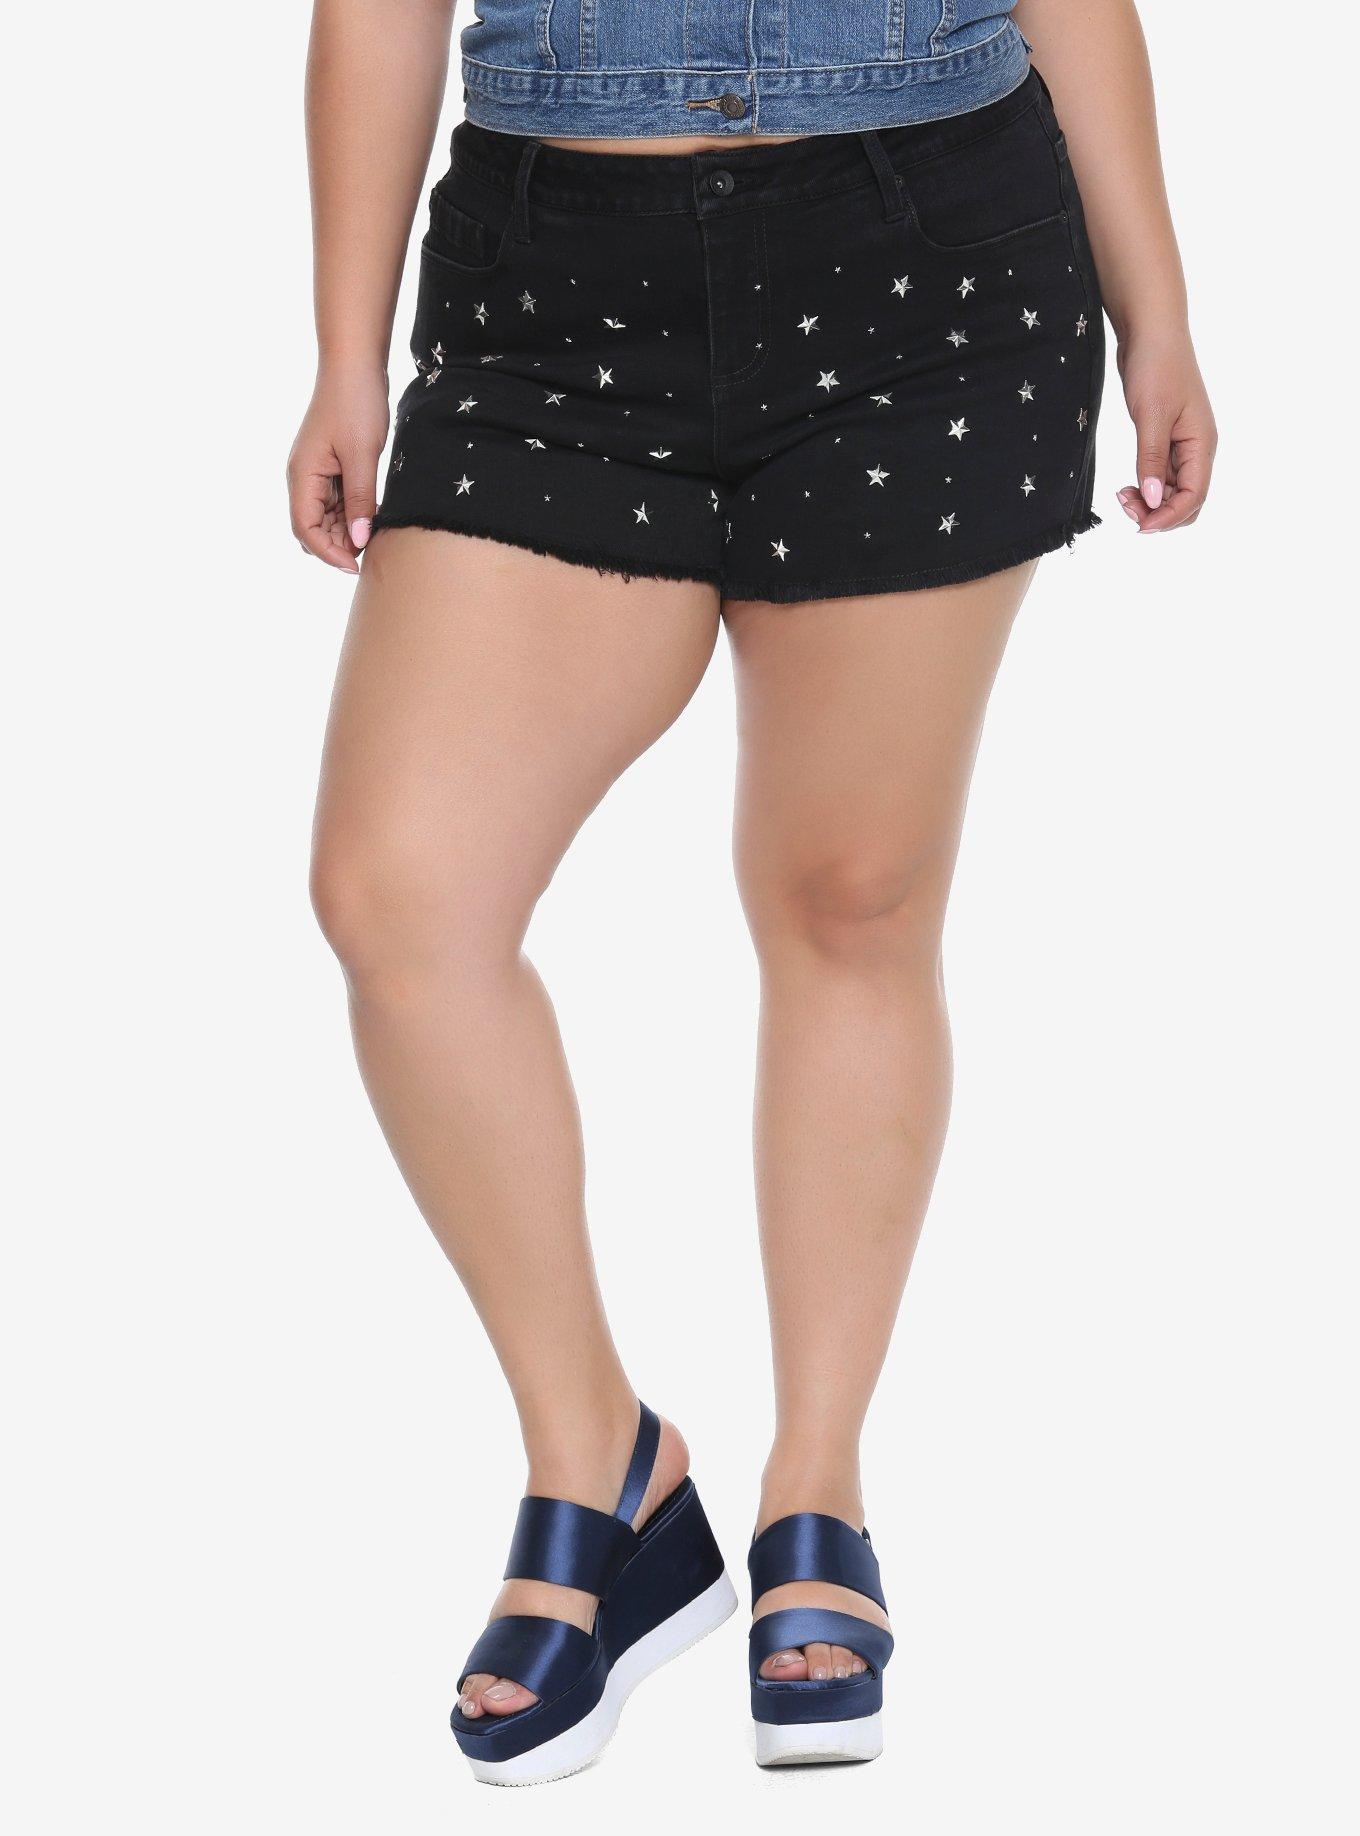 Blackheart Black Star Studded High-Waist Shorts Plus Size, BLACK, hi-res